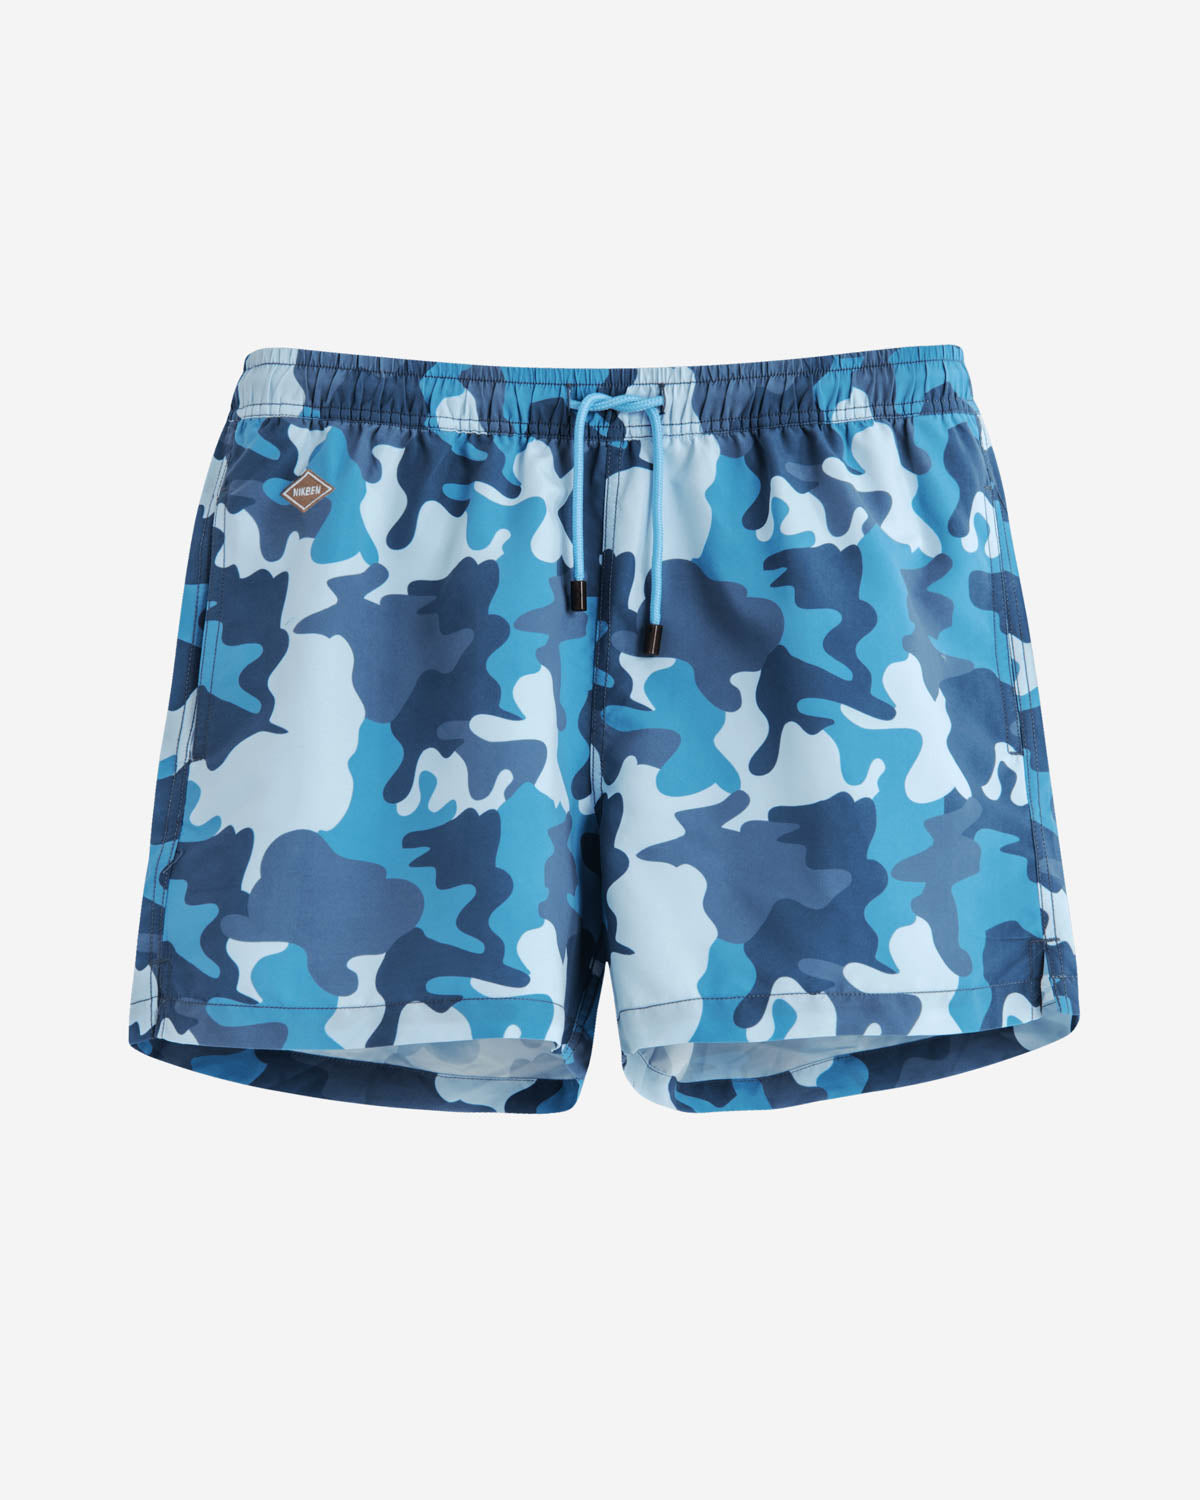 Blue camouflage printed swim trunks